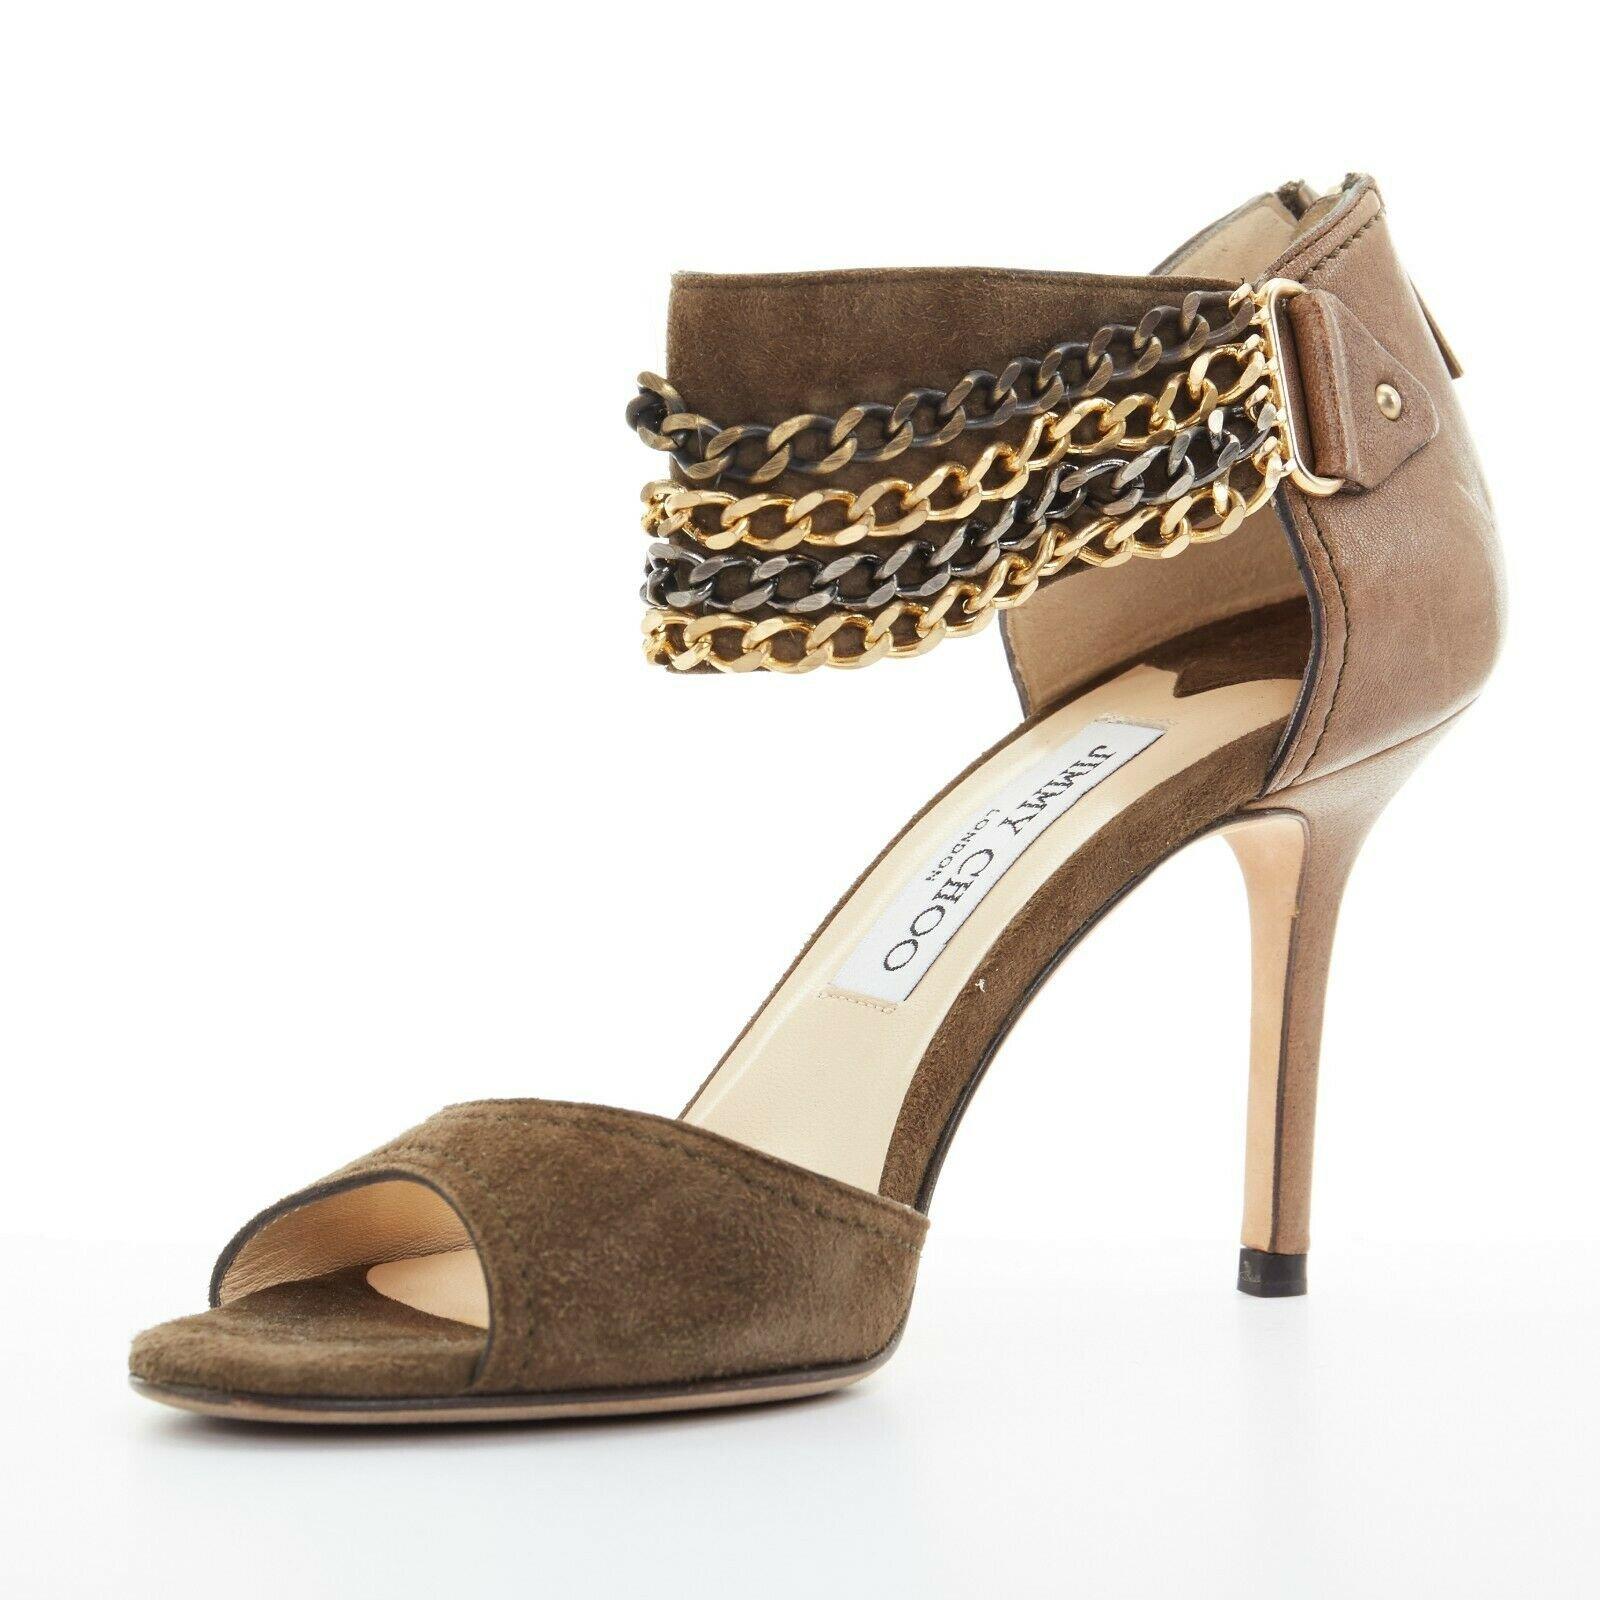 dark brown heels with ankle strap